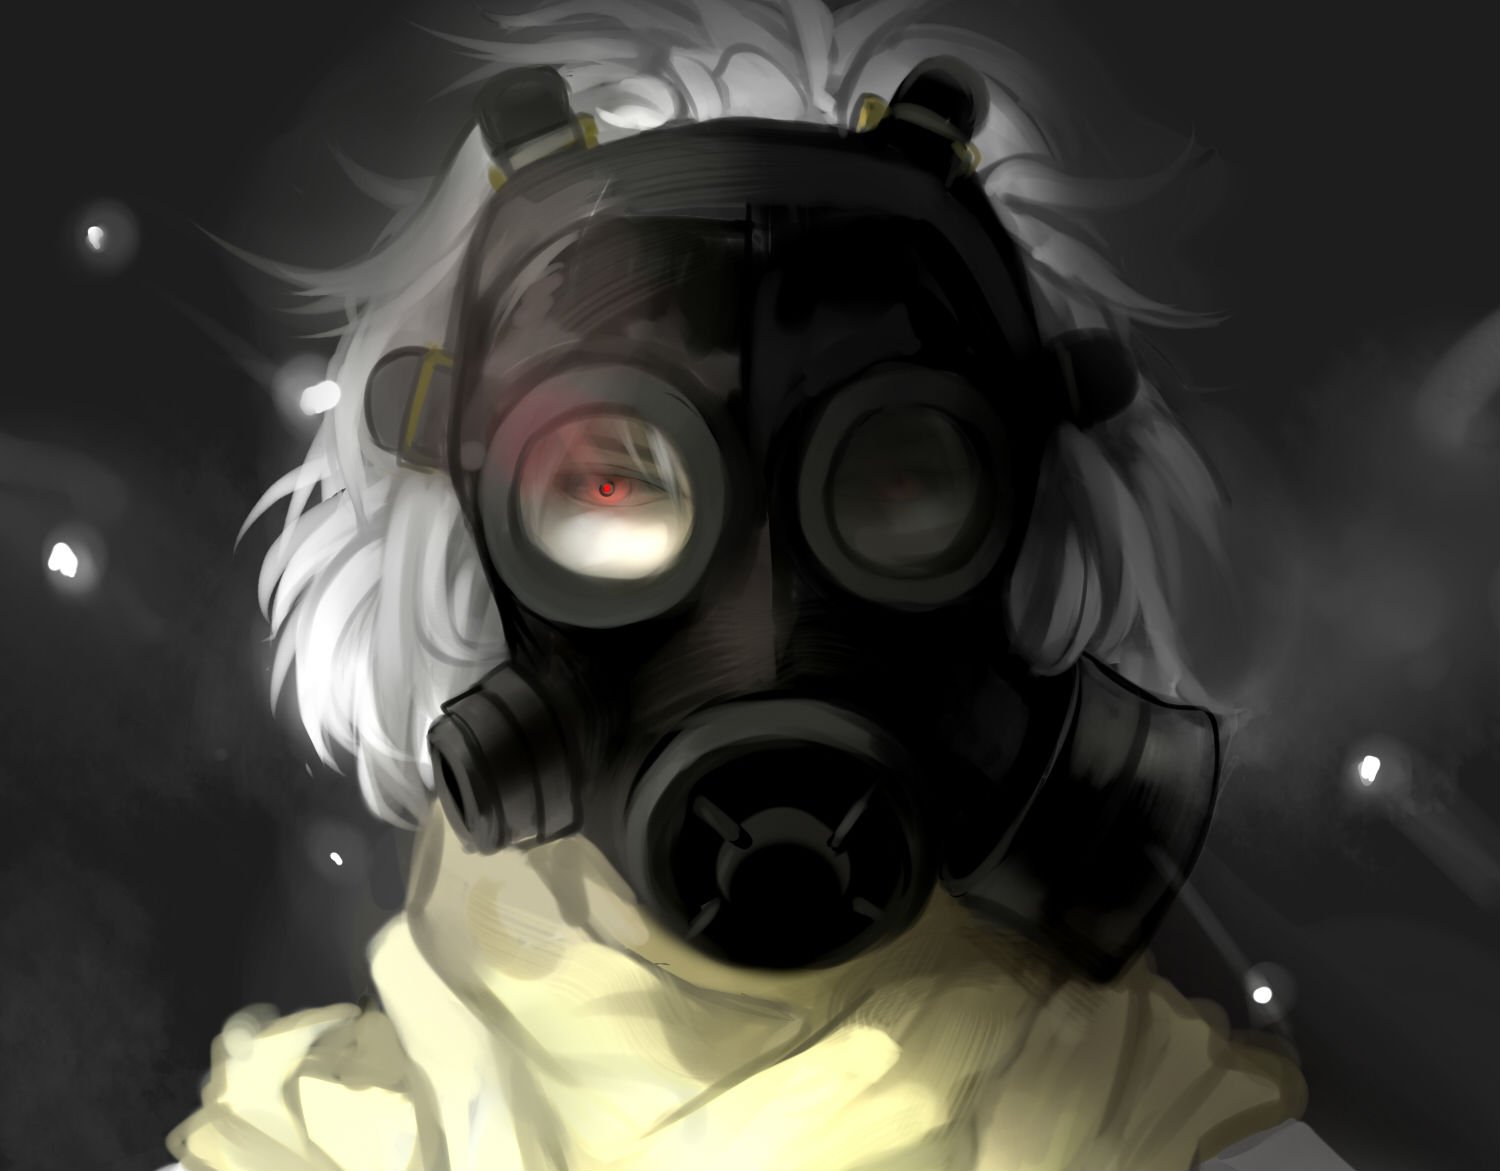 Anime boy Gas Mask by lKoizumil on DeviantArt